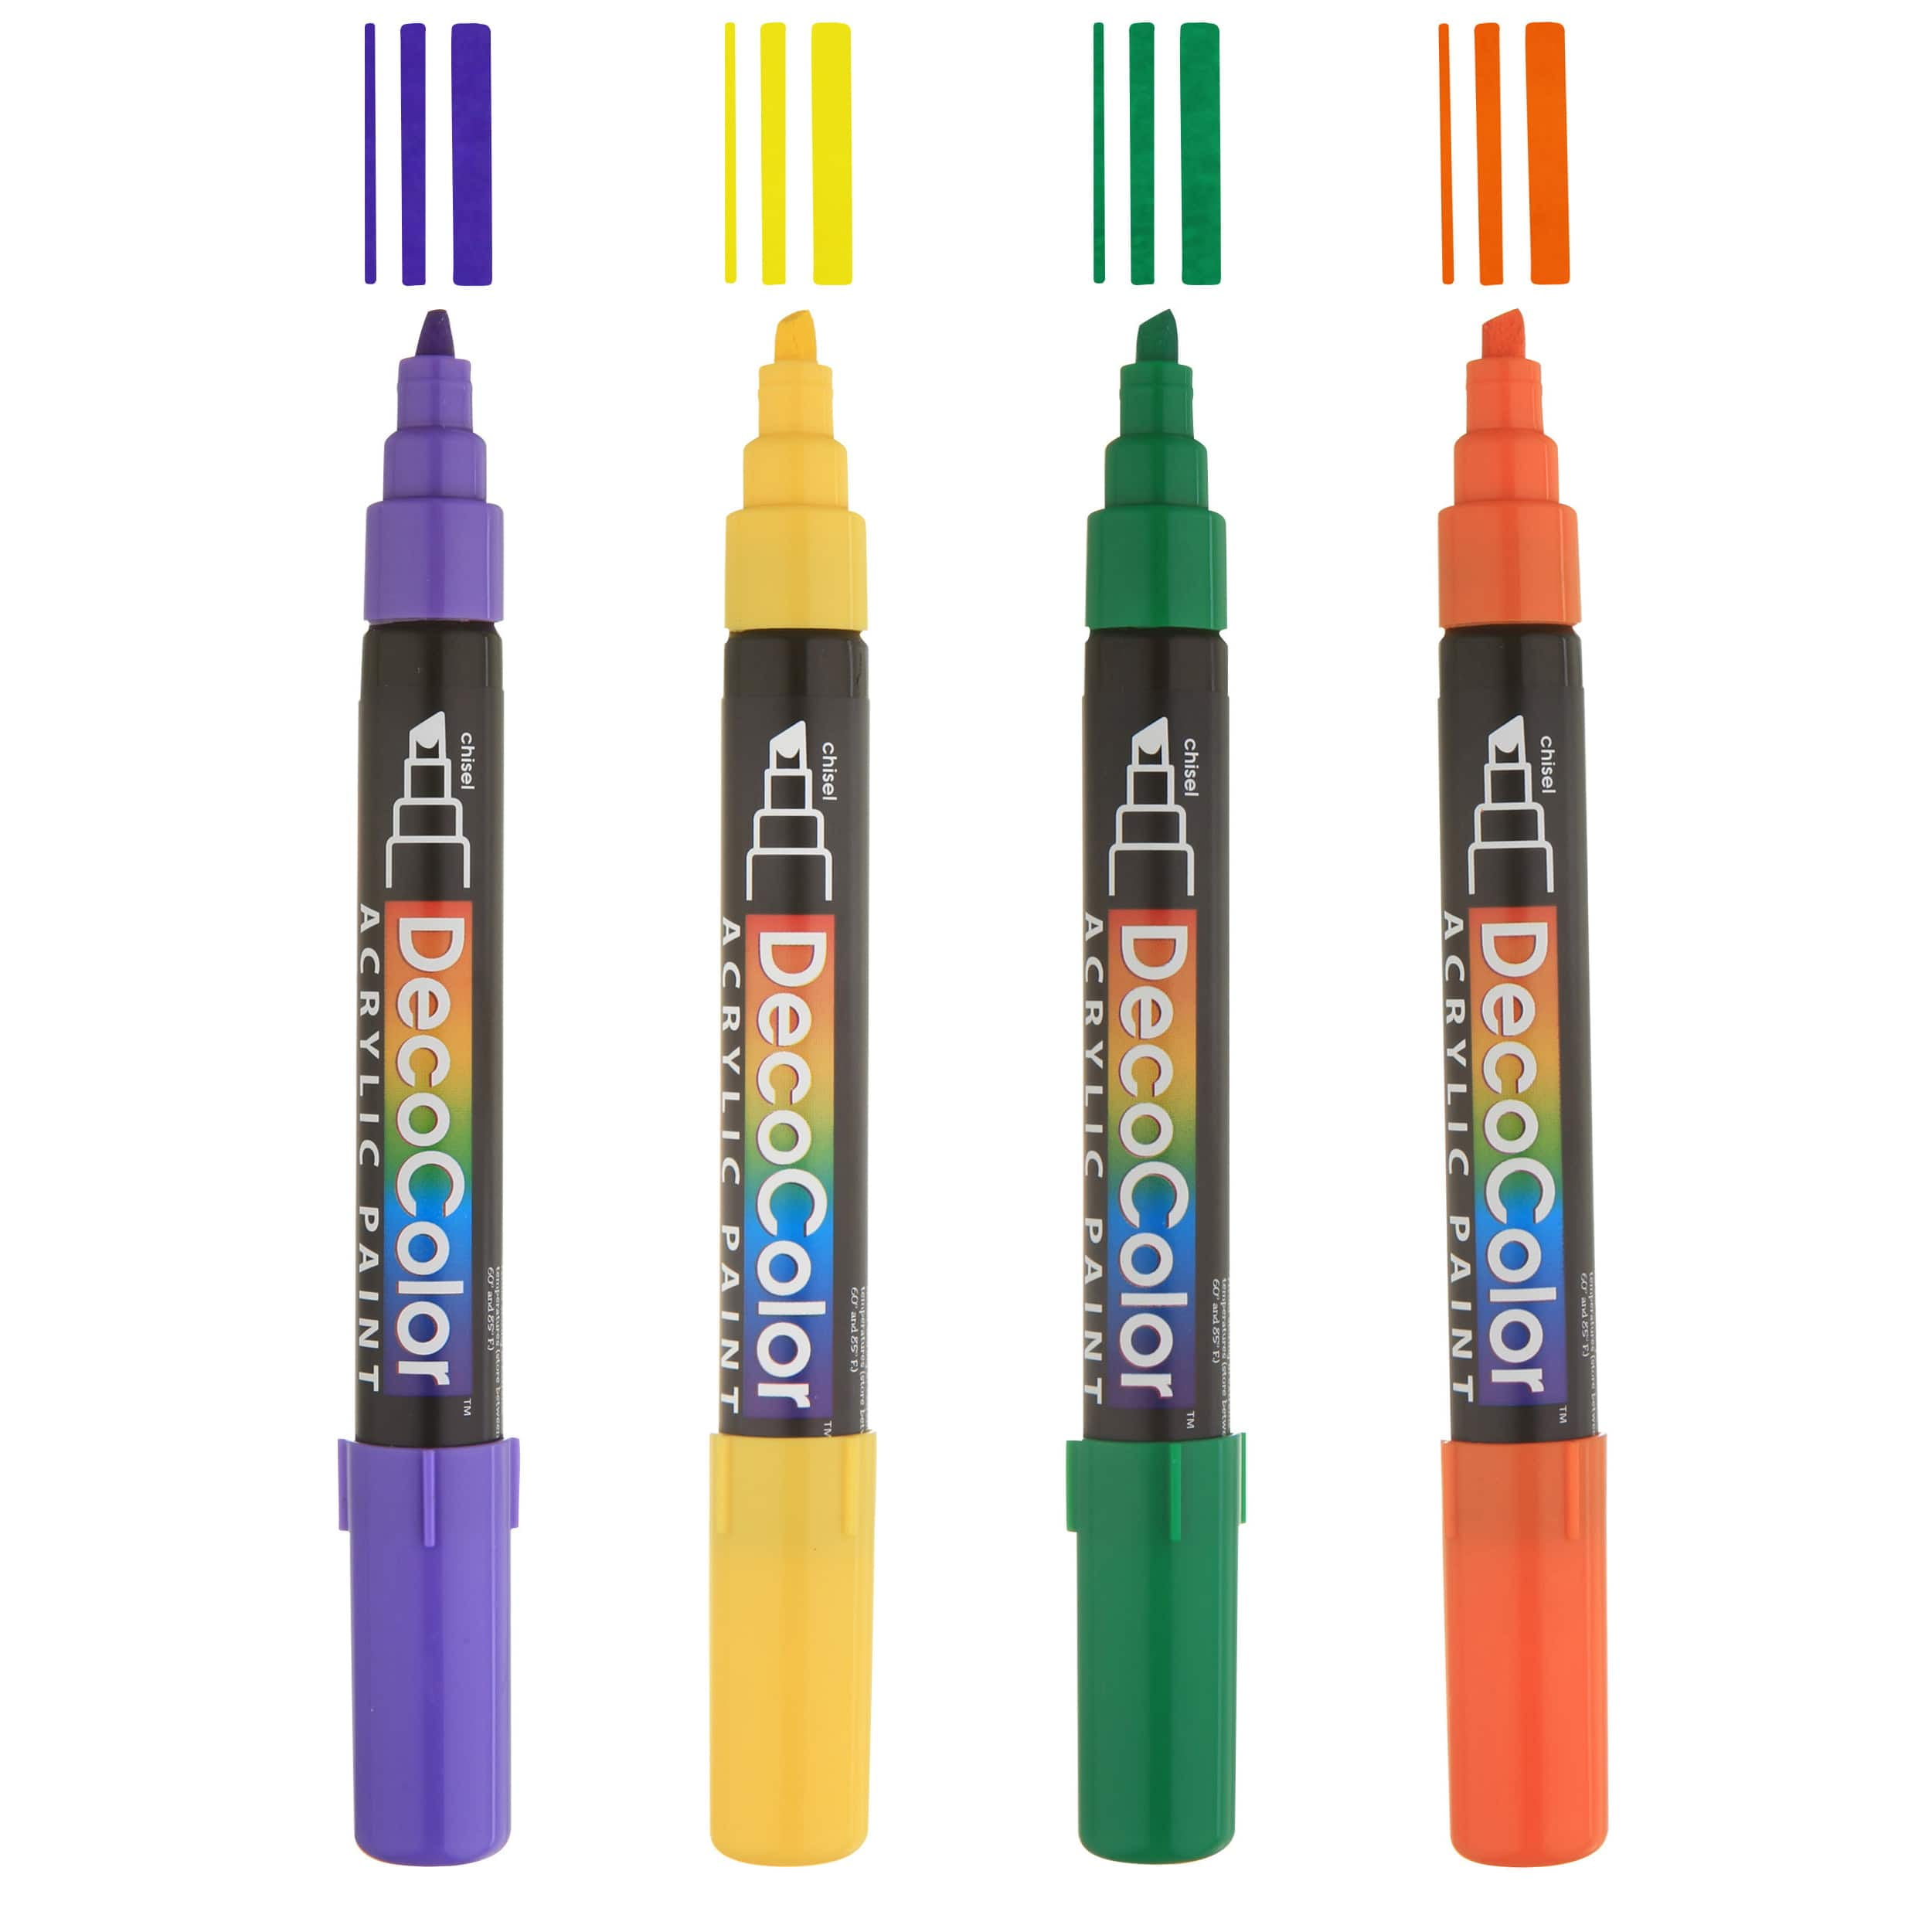 Art Acrylic Paint Pens, 46 Acrylic Paint Markers, Extra Fine Tip